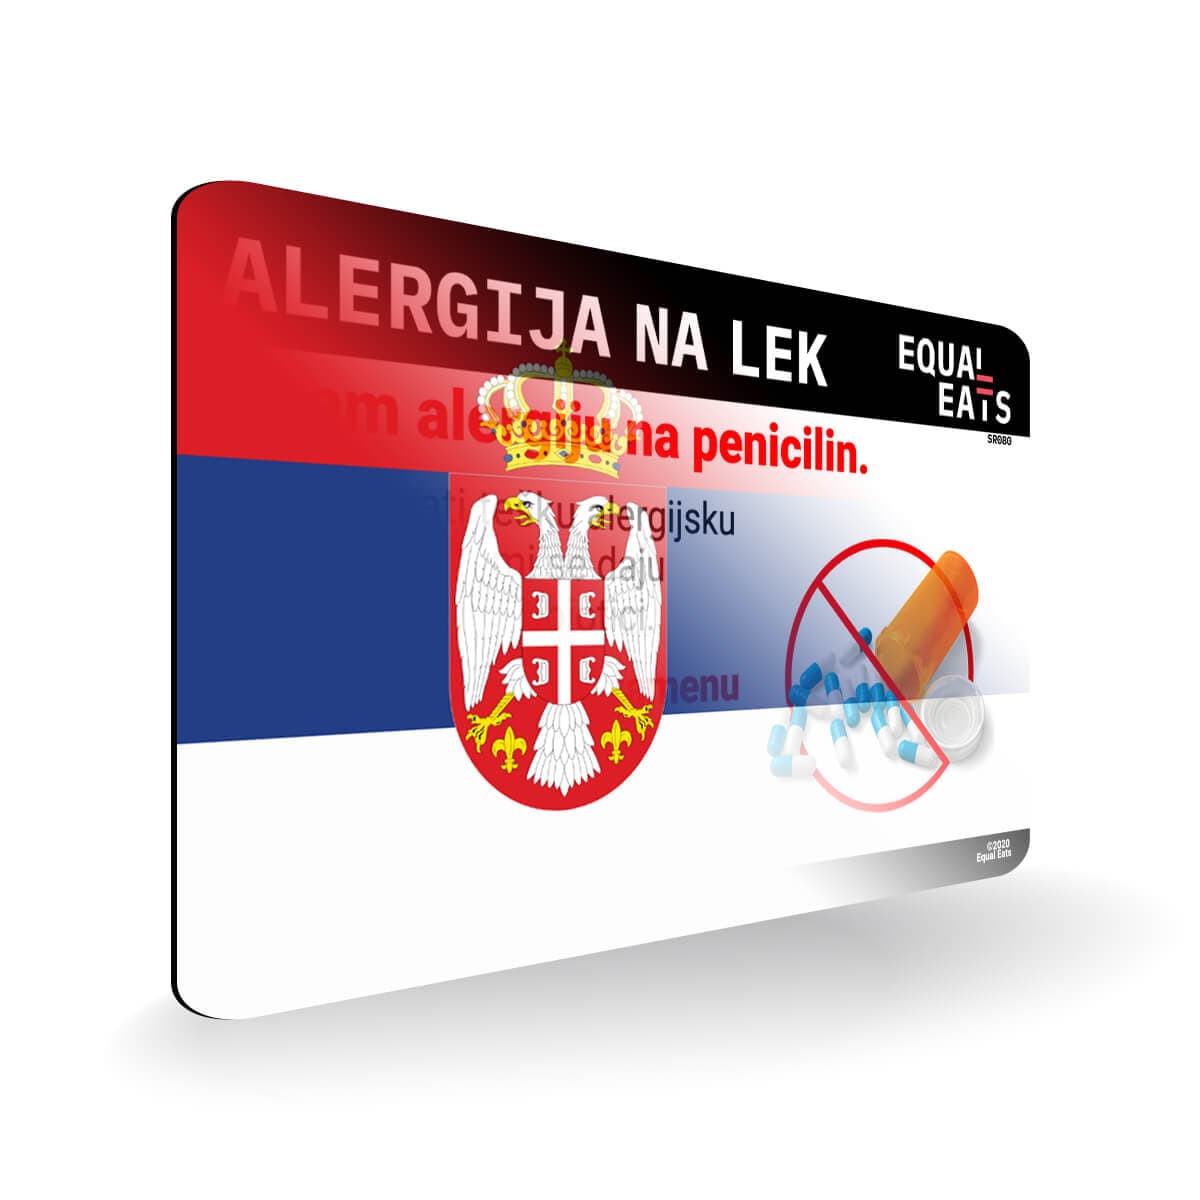 Penicillin Allergy in Serbian. Penicillin medical ID Card for Serbia